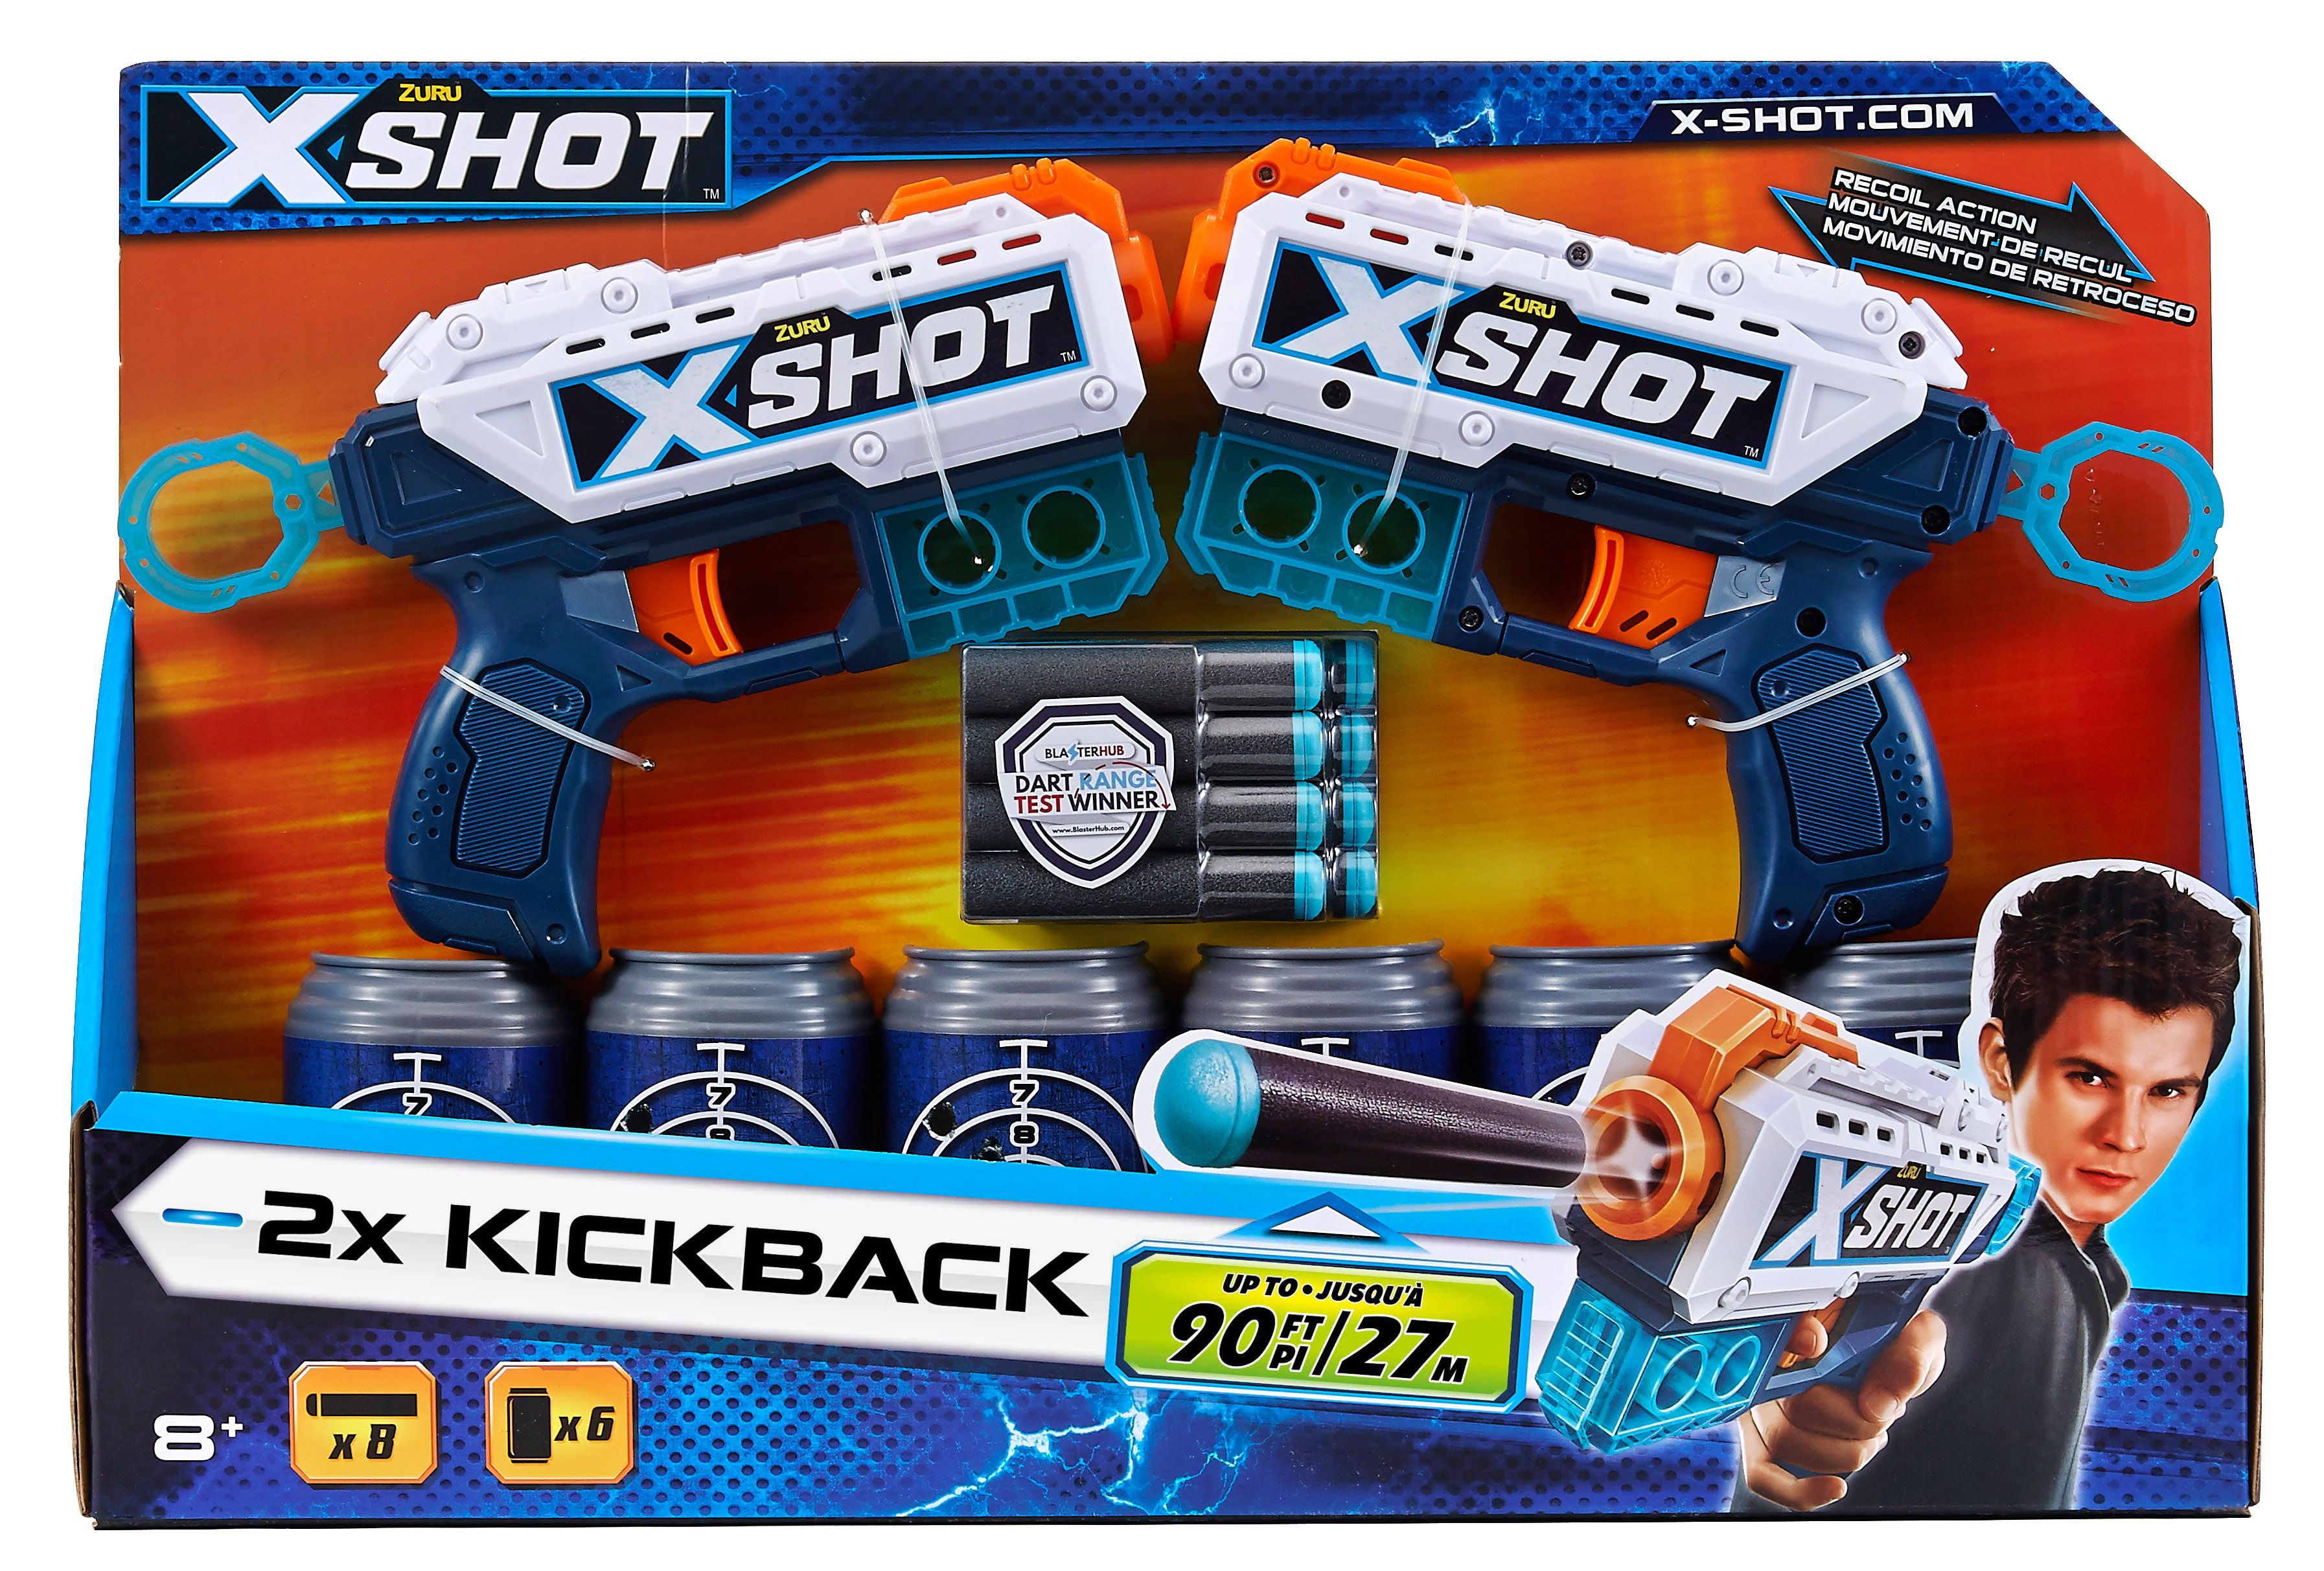 X-shot - 2x kickback set with 8 darts and 6 cans (20175)